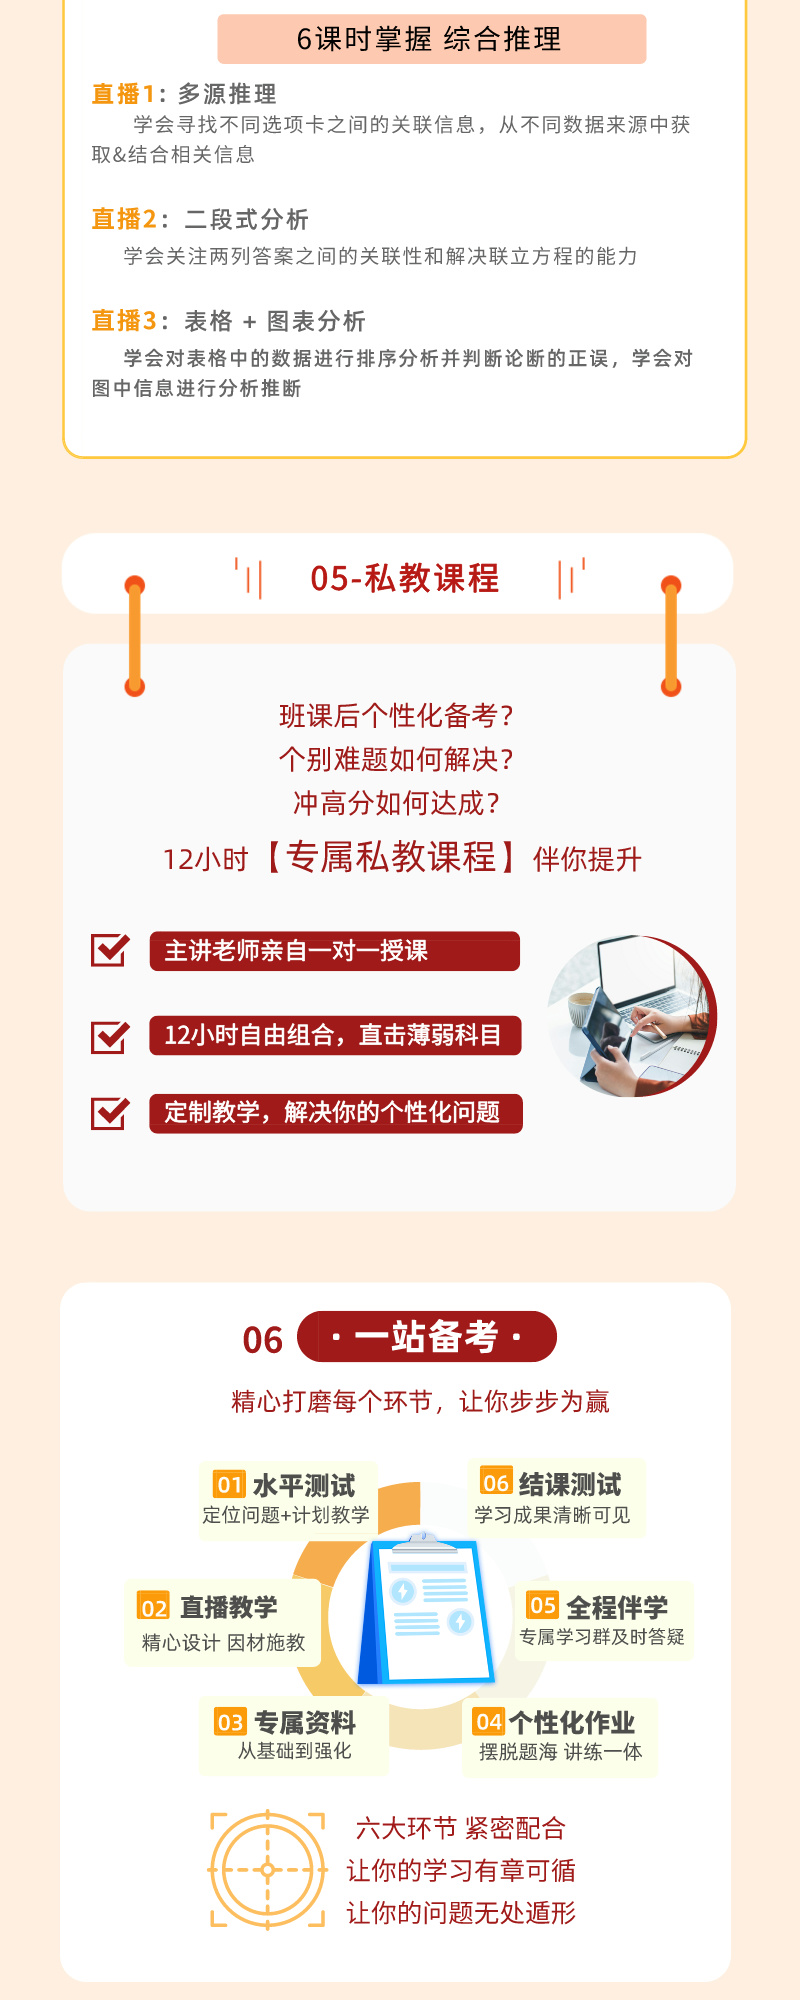 https://simg01.gaodunwangxiao.com/uploadfiles/product-center/202403/26/c8f46_20240326135803.jpg